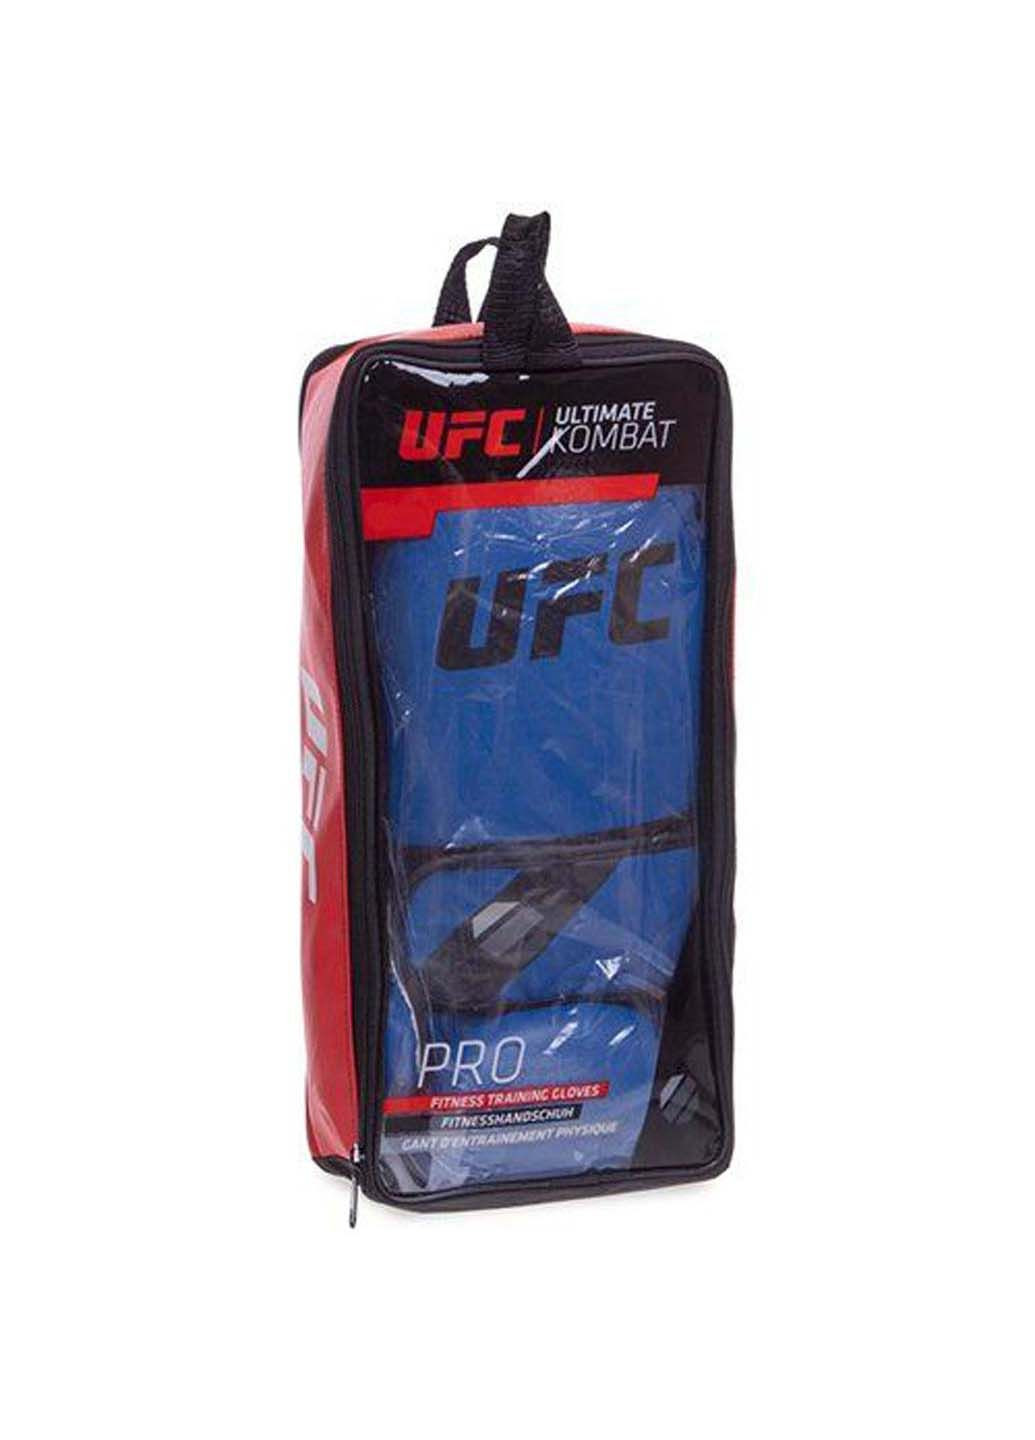 Перчатки боксерские PRO Fitness UHK-75036 14oz UFC (285794050)